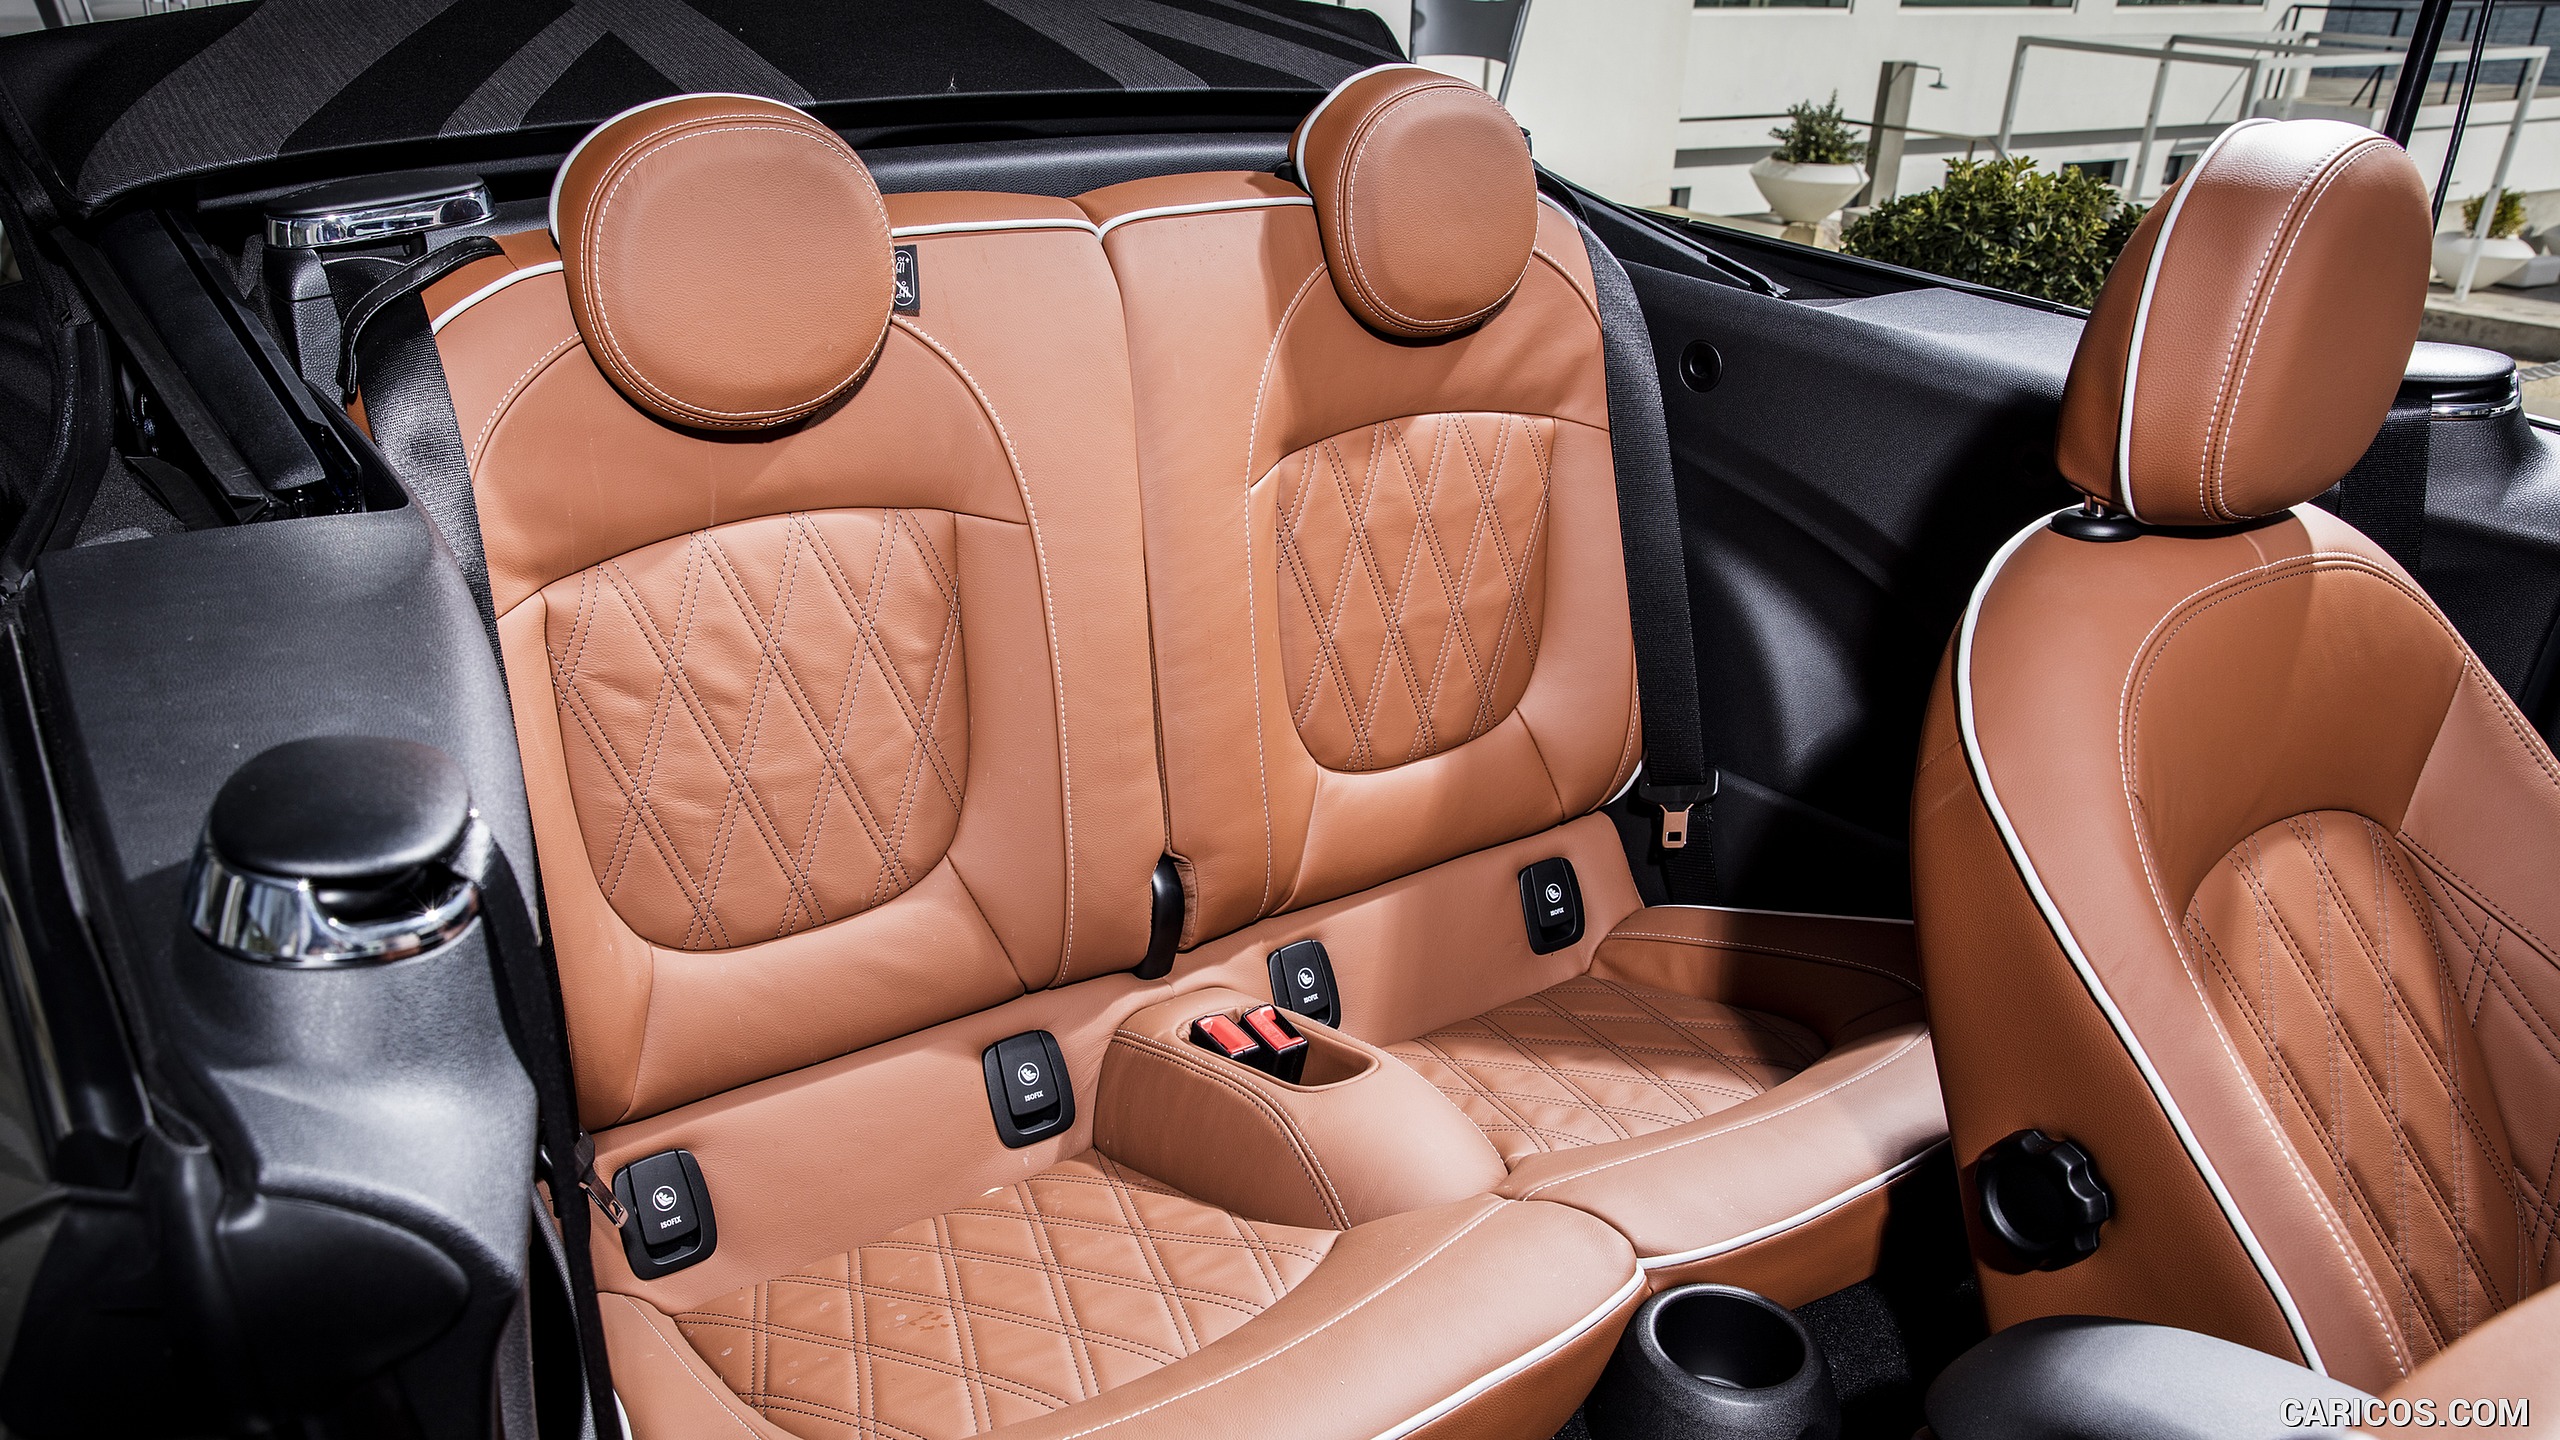 2016 MINI Convertible Open 150 Edition - Interior, Rear Seats, #12 of 15